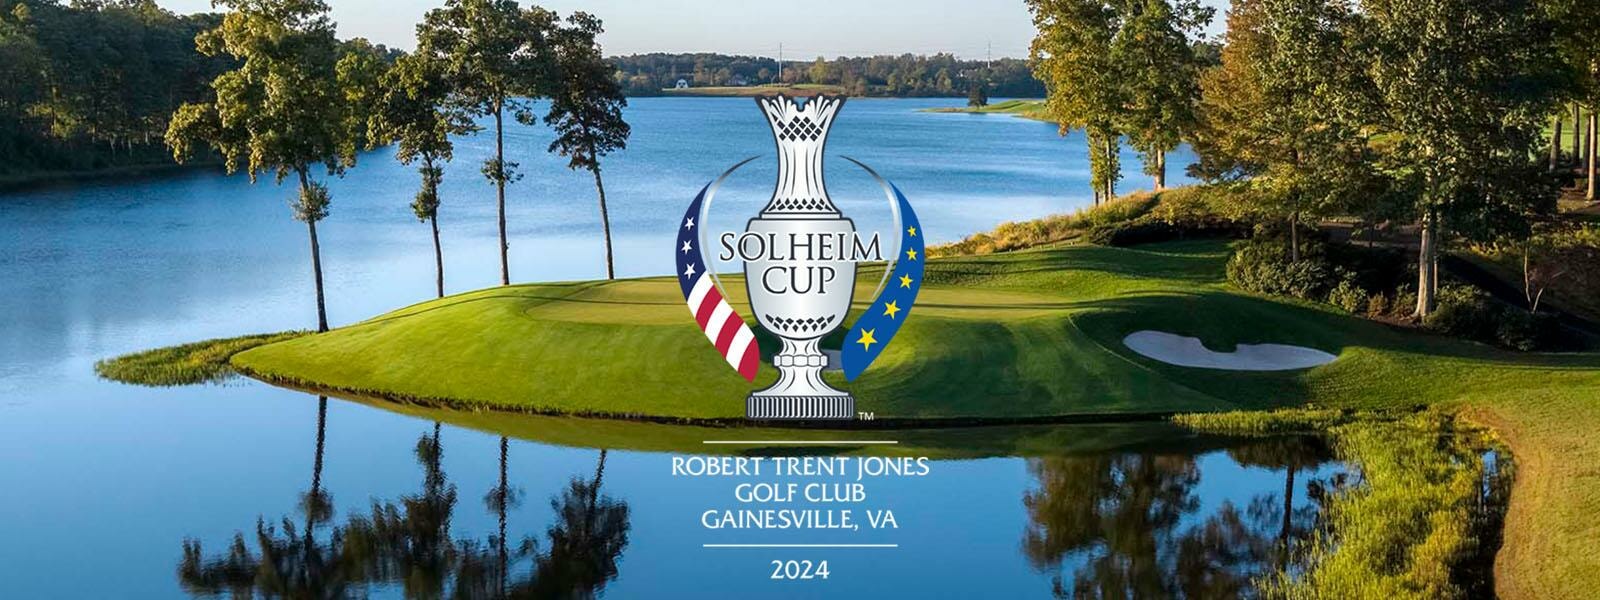 2024 Solheim Cup Robert Trent Jones Golf Club